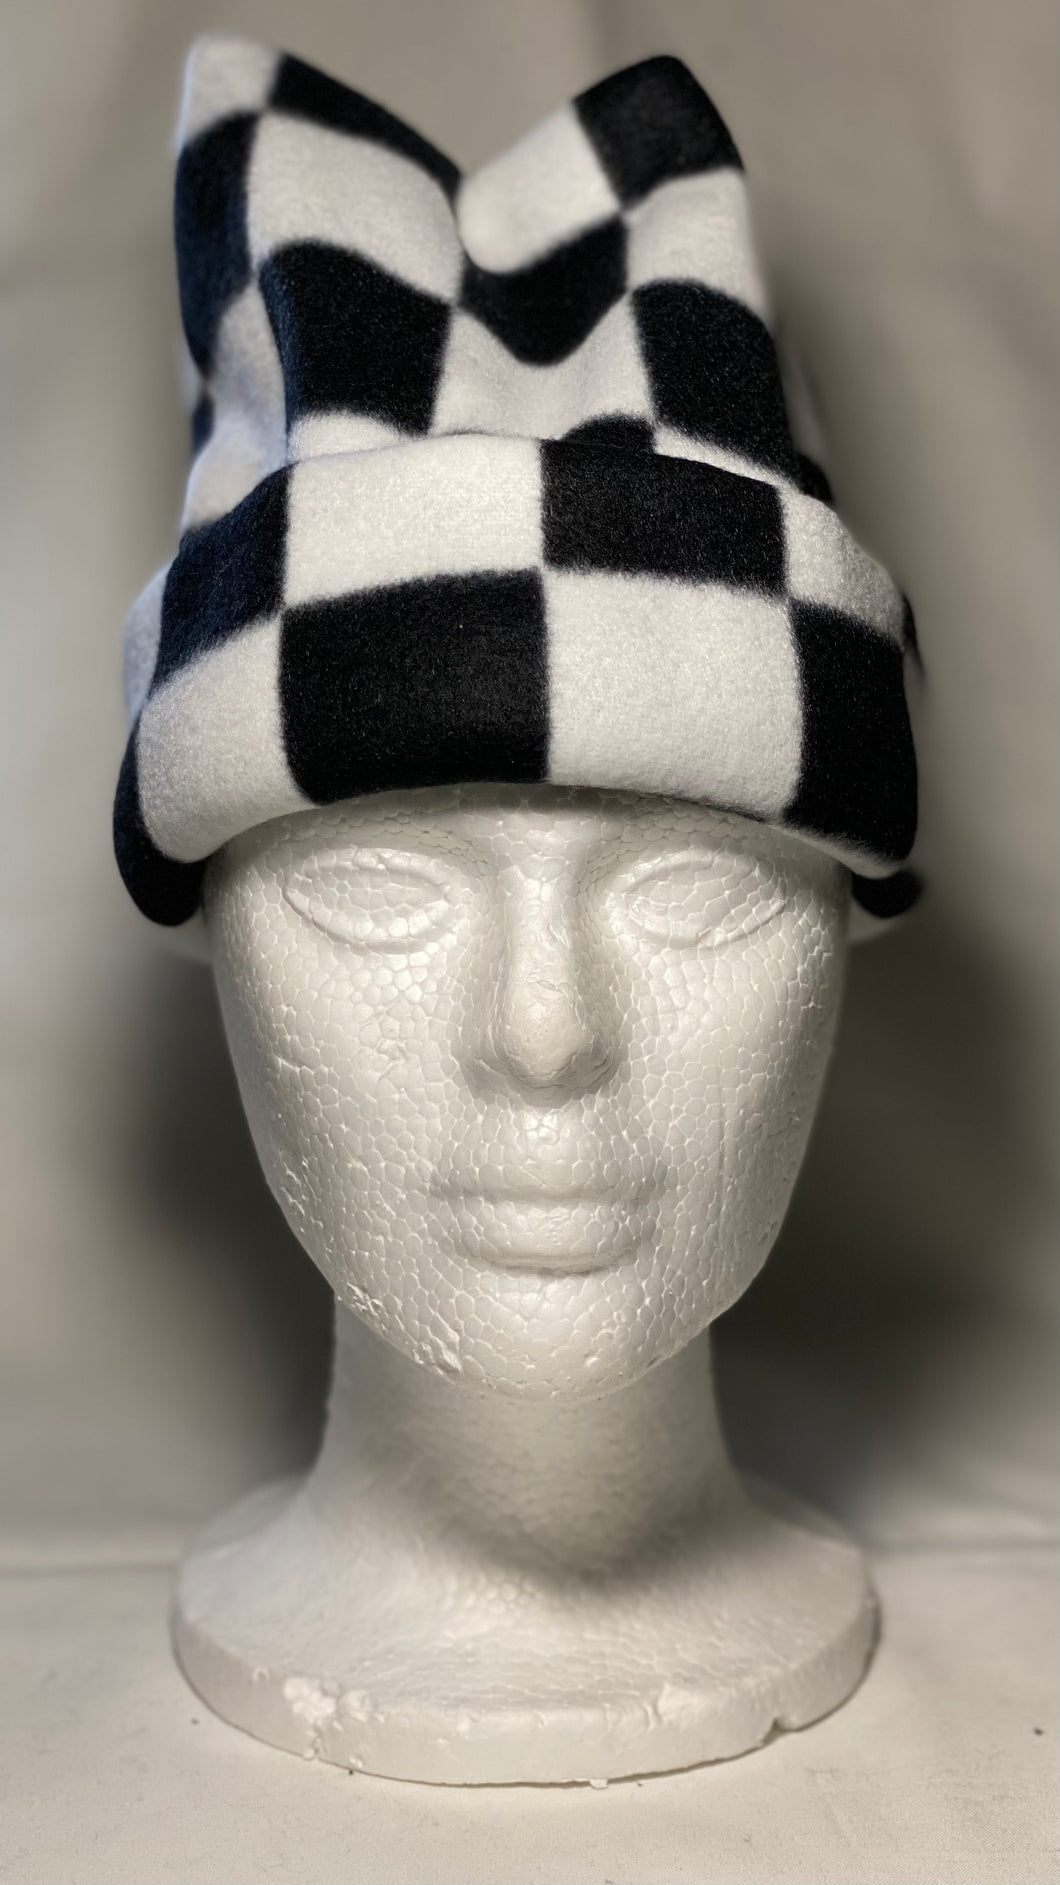 Checkered Fleece Hat